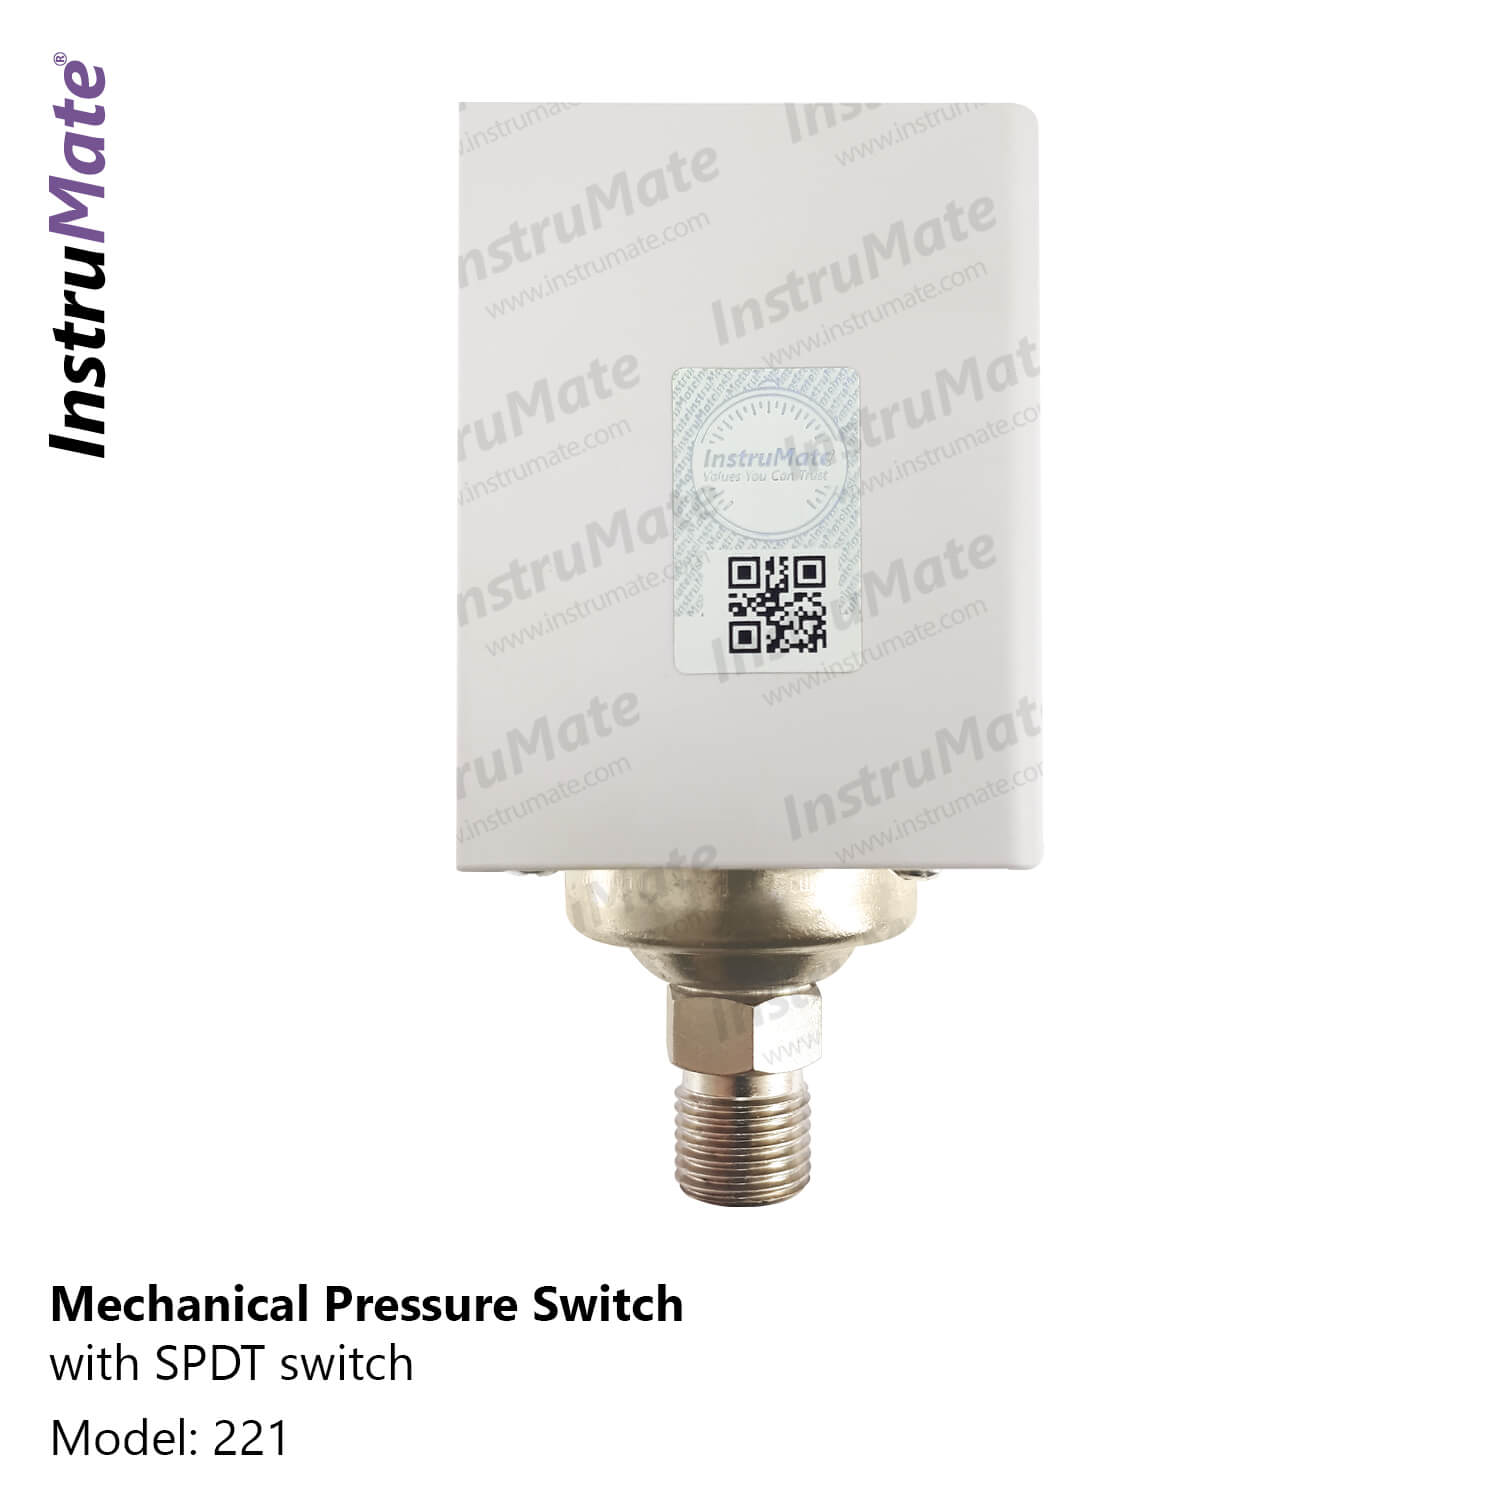 Pressure Switches - 221 - instrumate